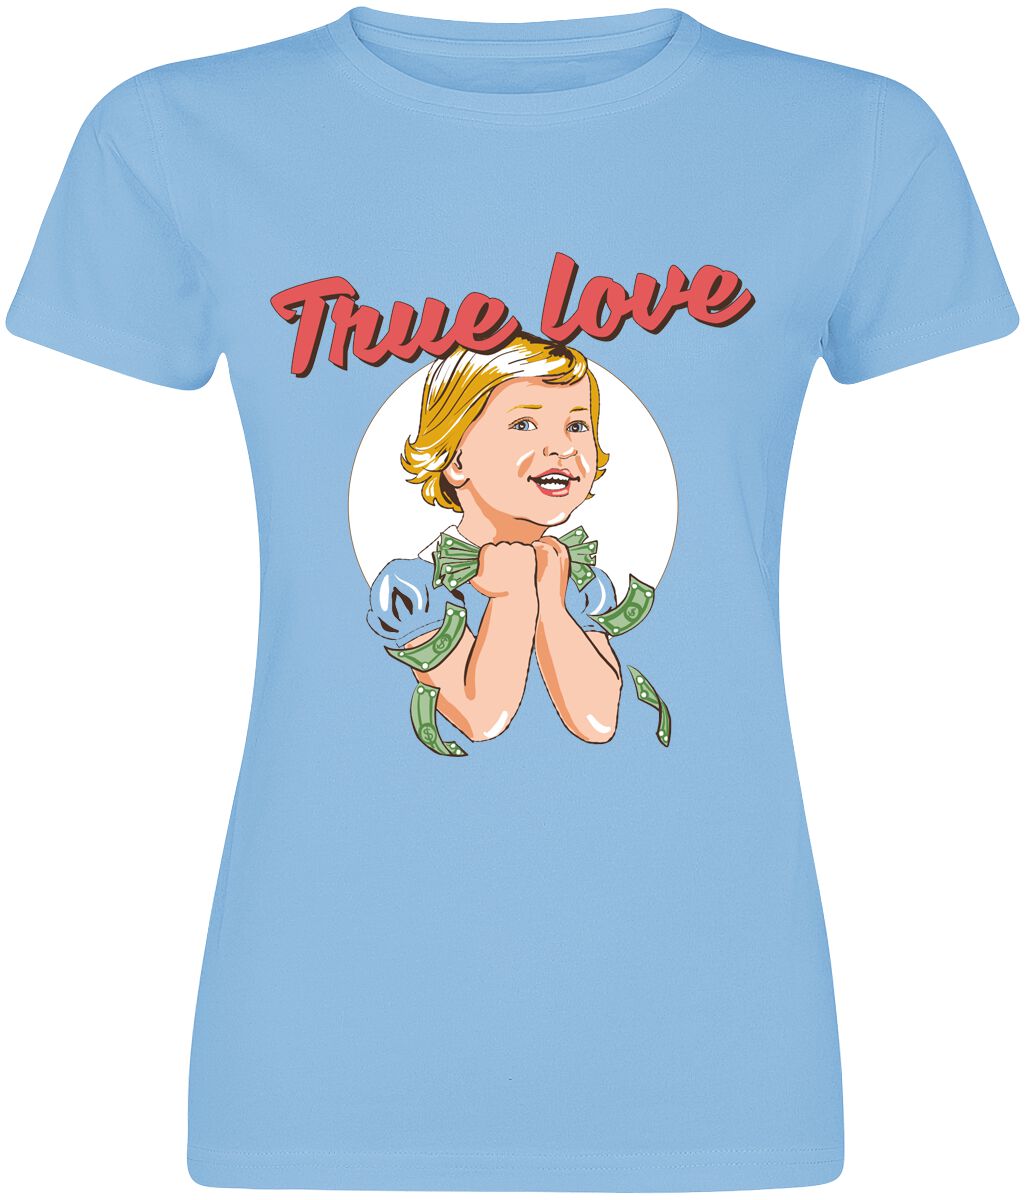 Fun Shirt Slogans - True Love T-Shirt turquoise